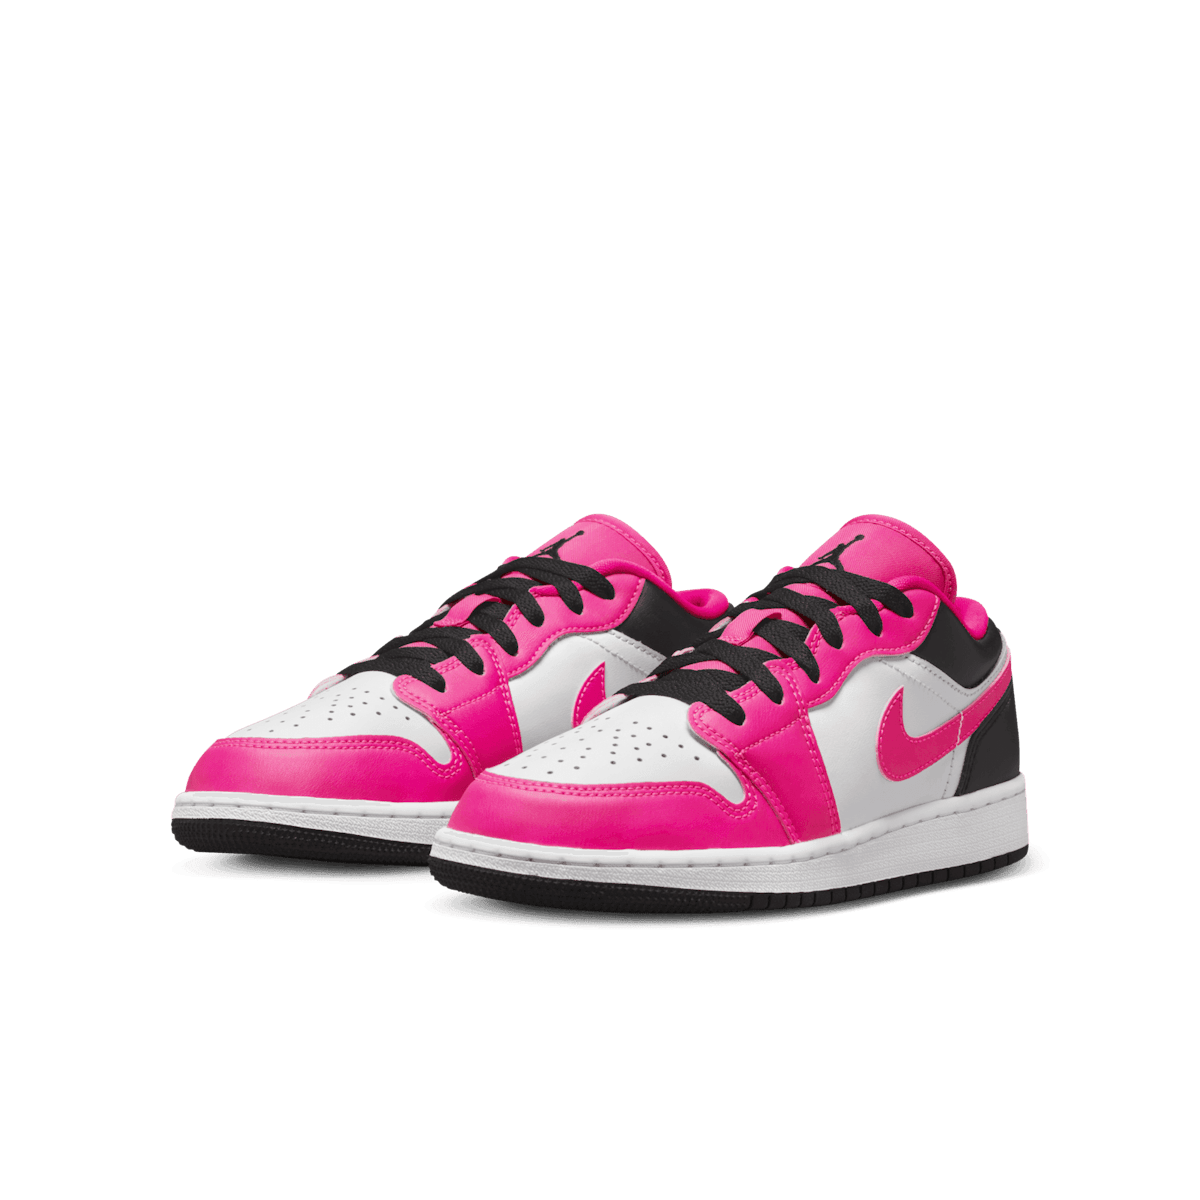 Air Jordan 1 Low Fierce Pink (GS) Angle 2